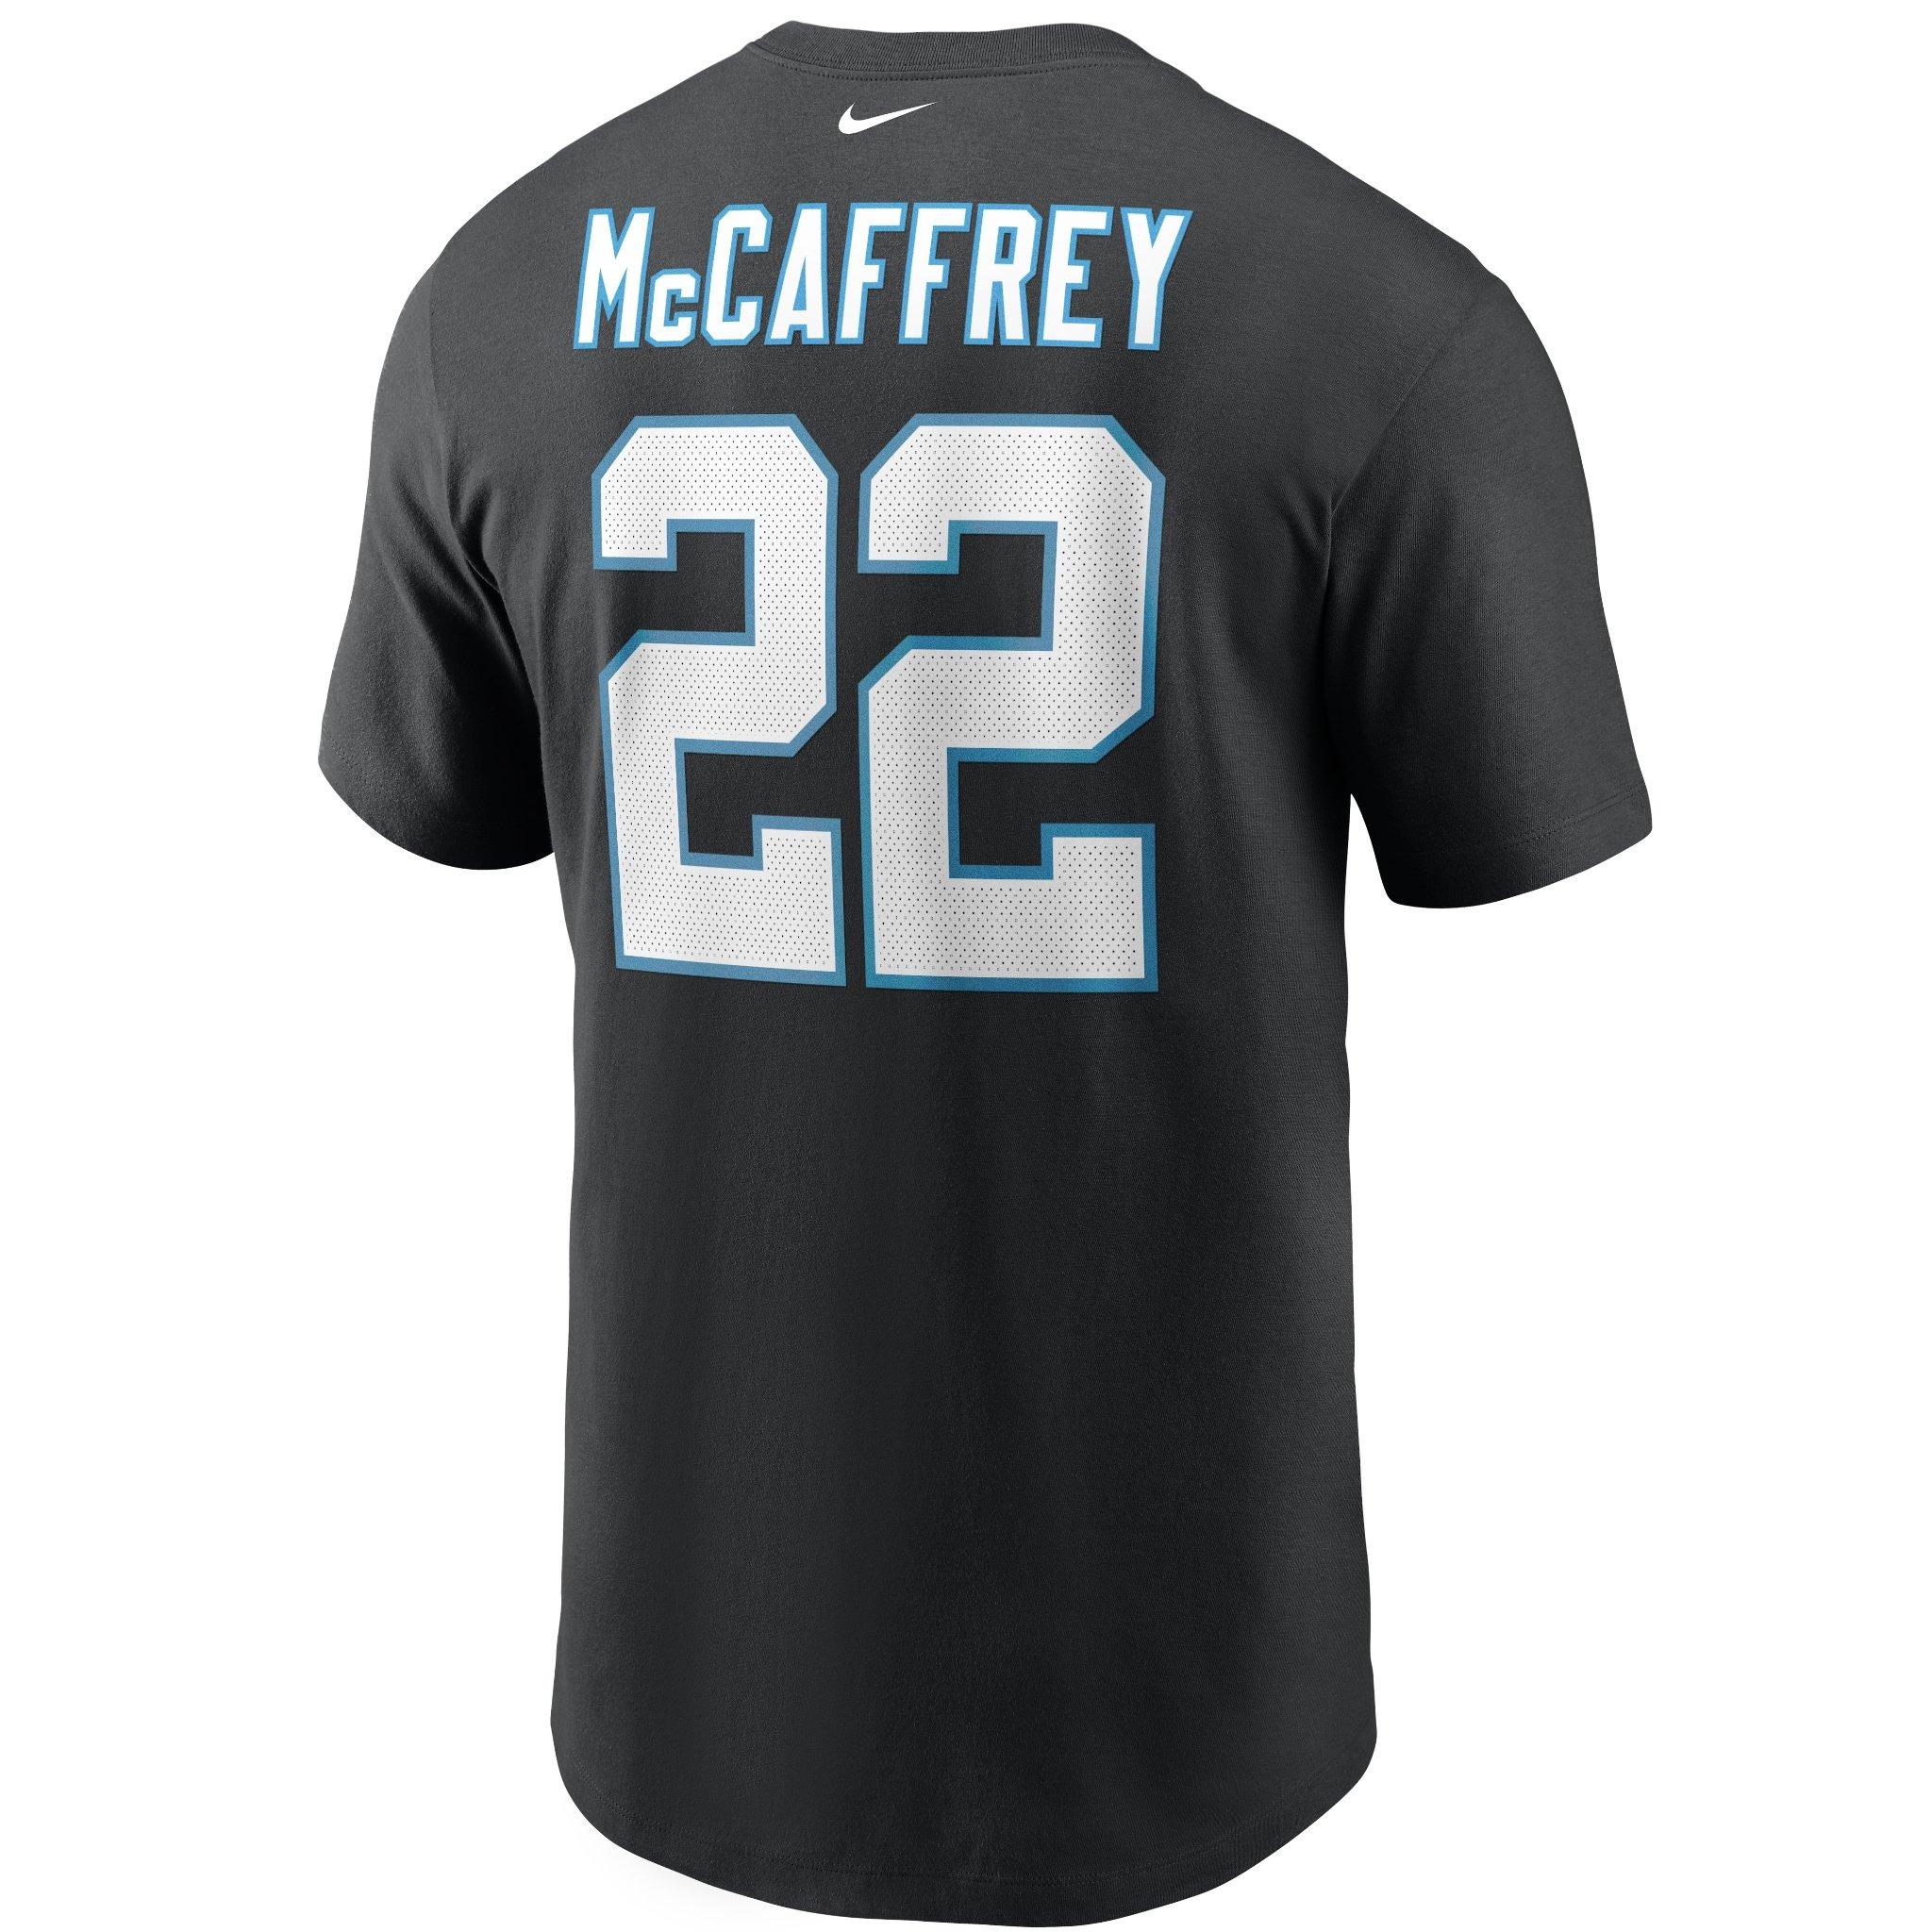 mccaffrey shirt